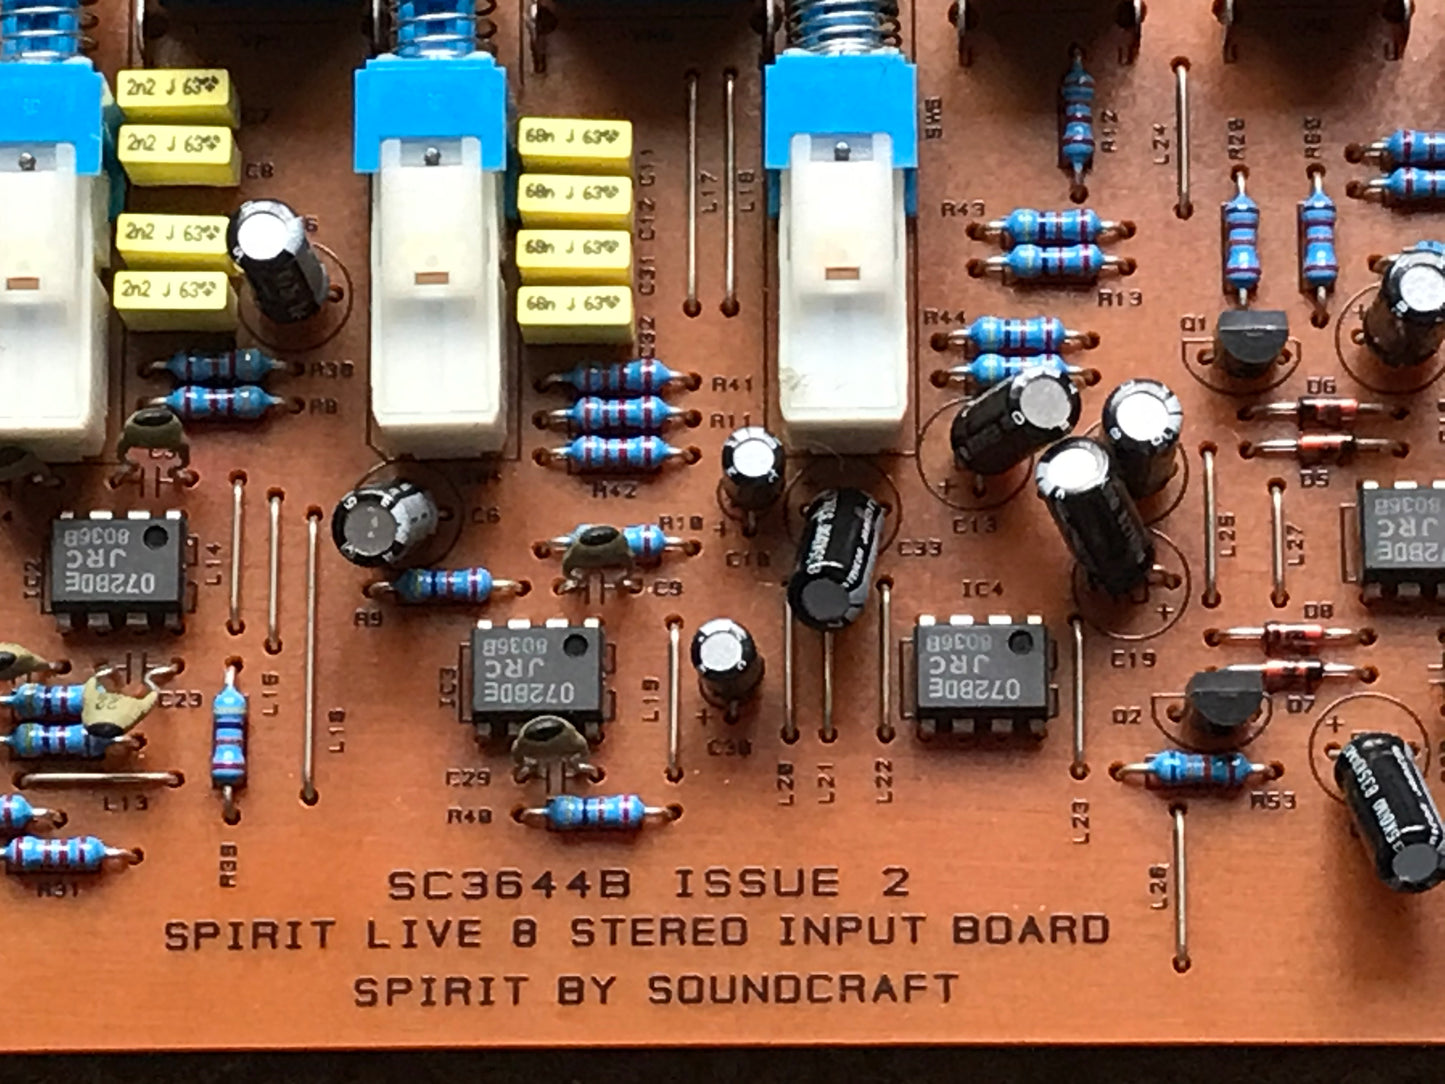 Soundcraft Spirit live 8 Stereo input board SC3644B Issue 2